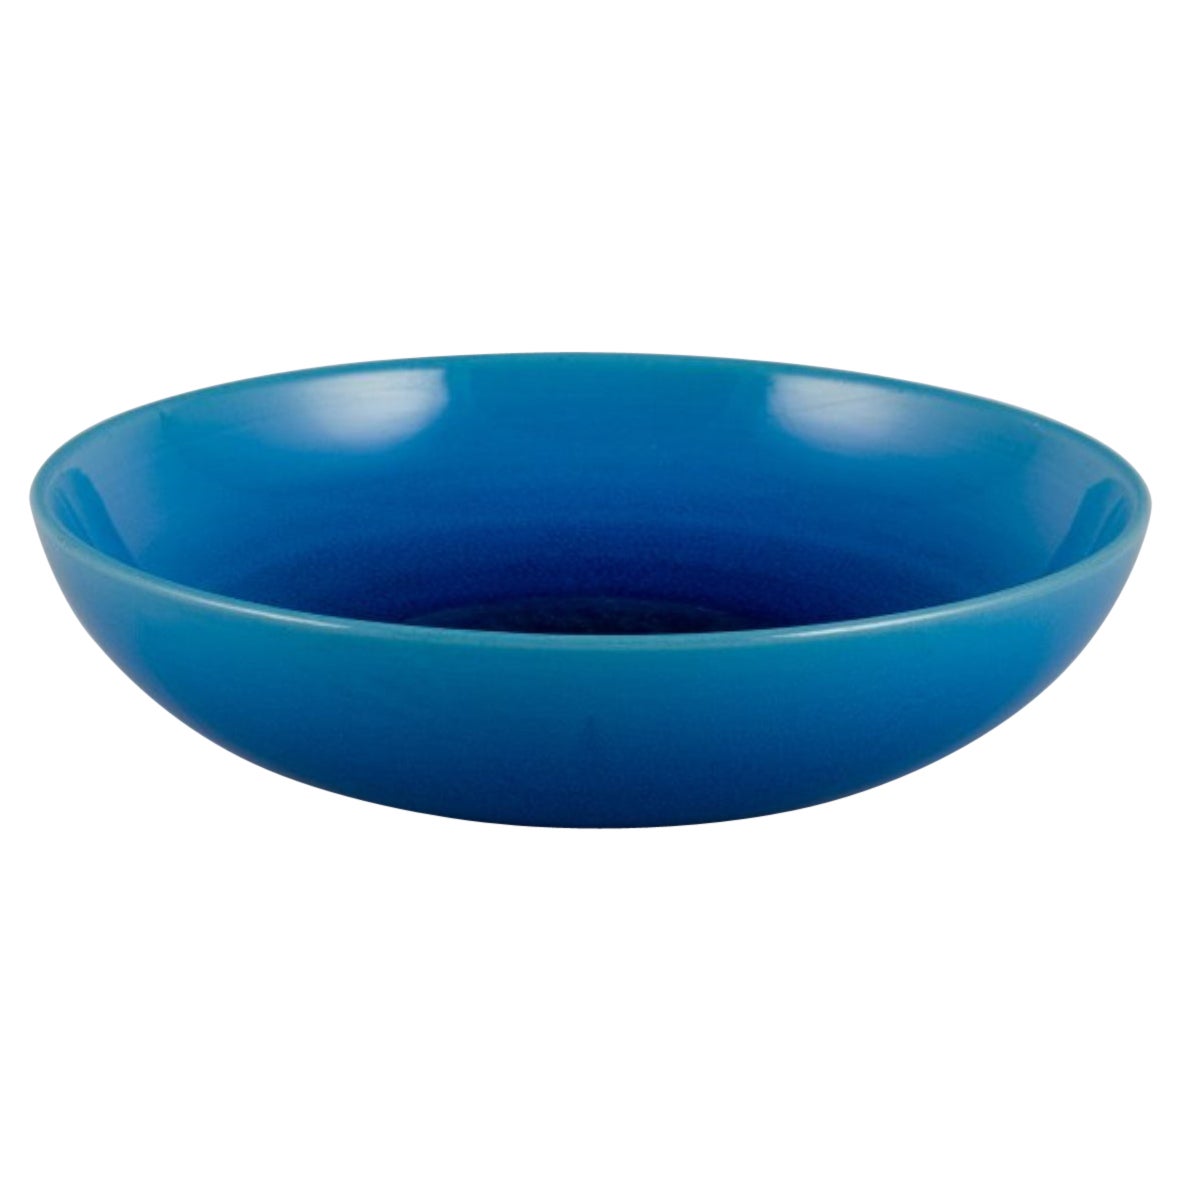 Carl Harry Stålhane for Rörstrand. Ceramic bowl in turquoise glaze.